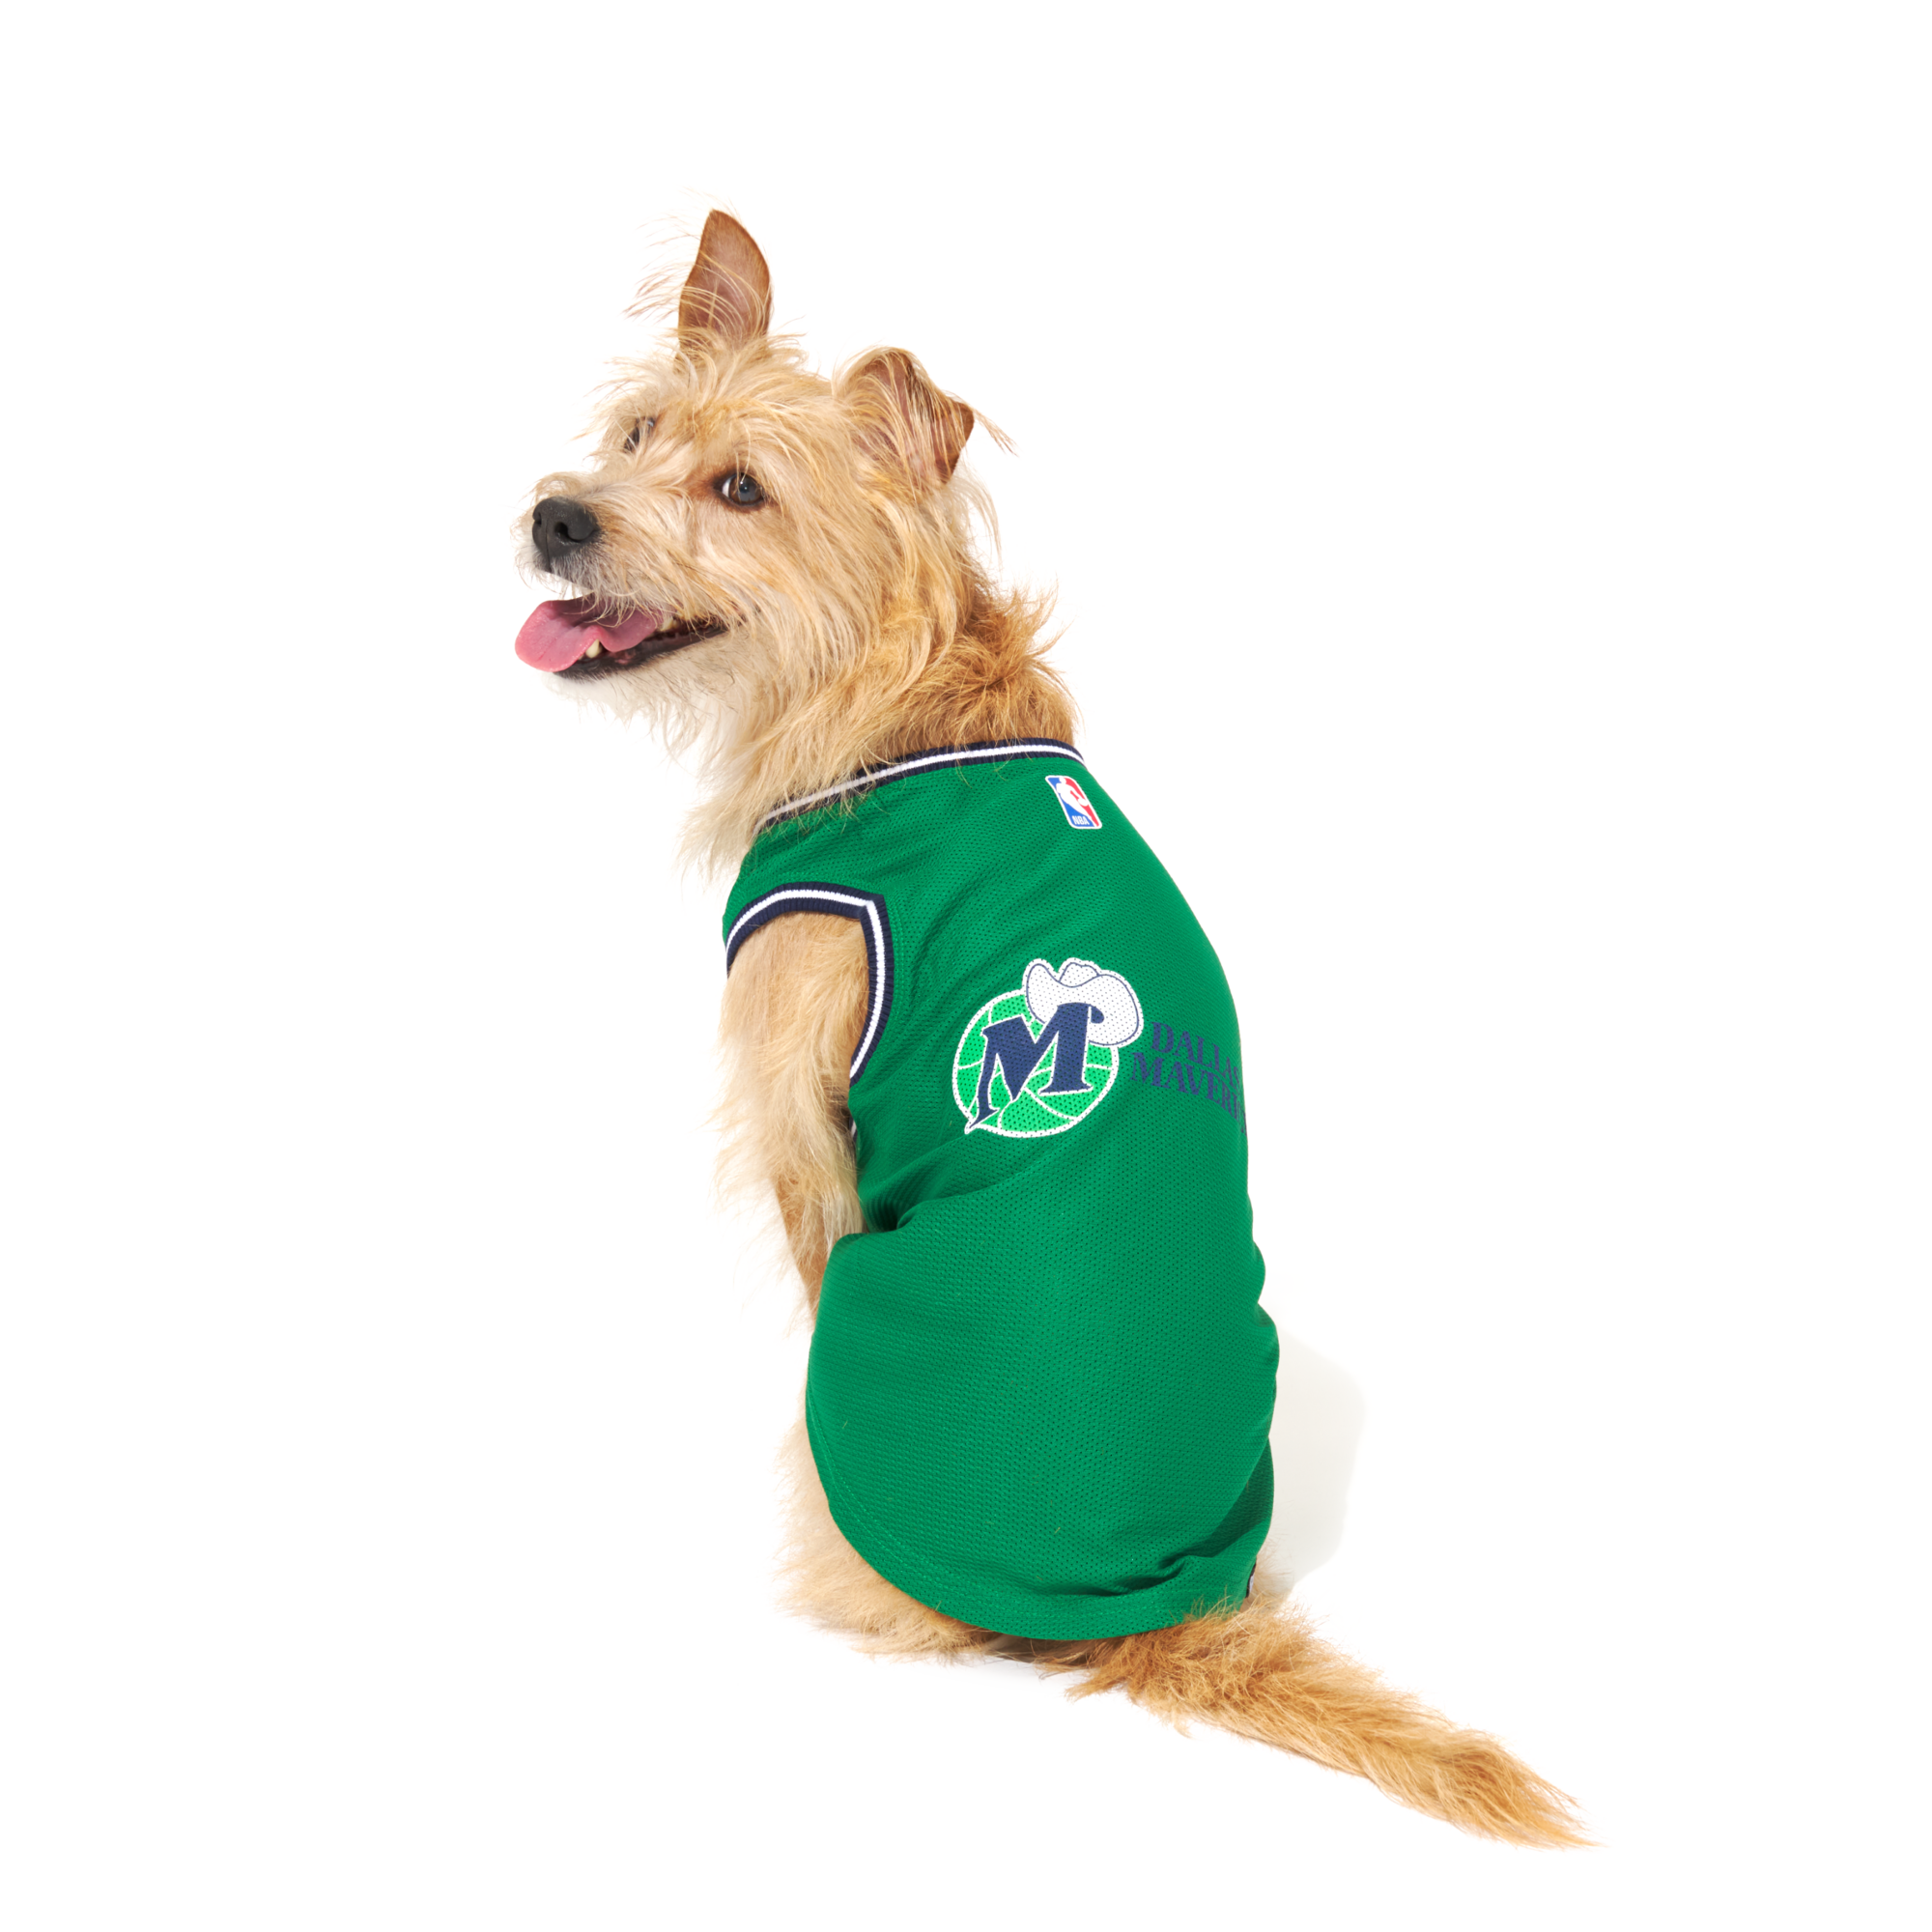 Boston Celtics Mesh Basketball Dog Jersey